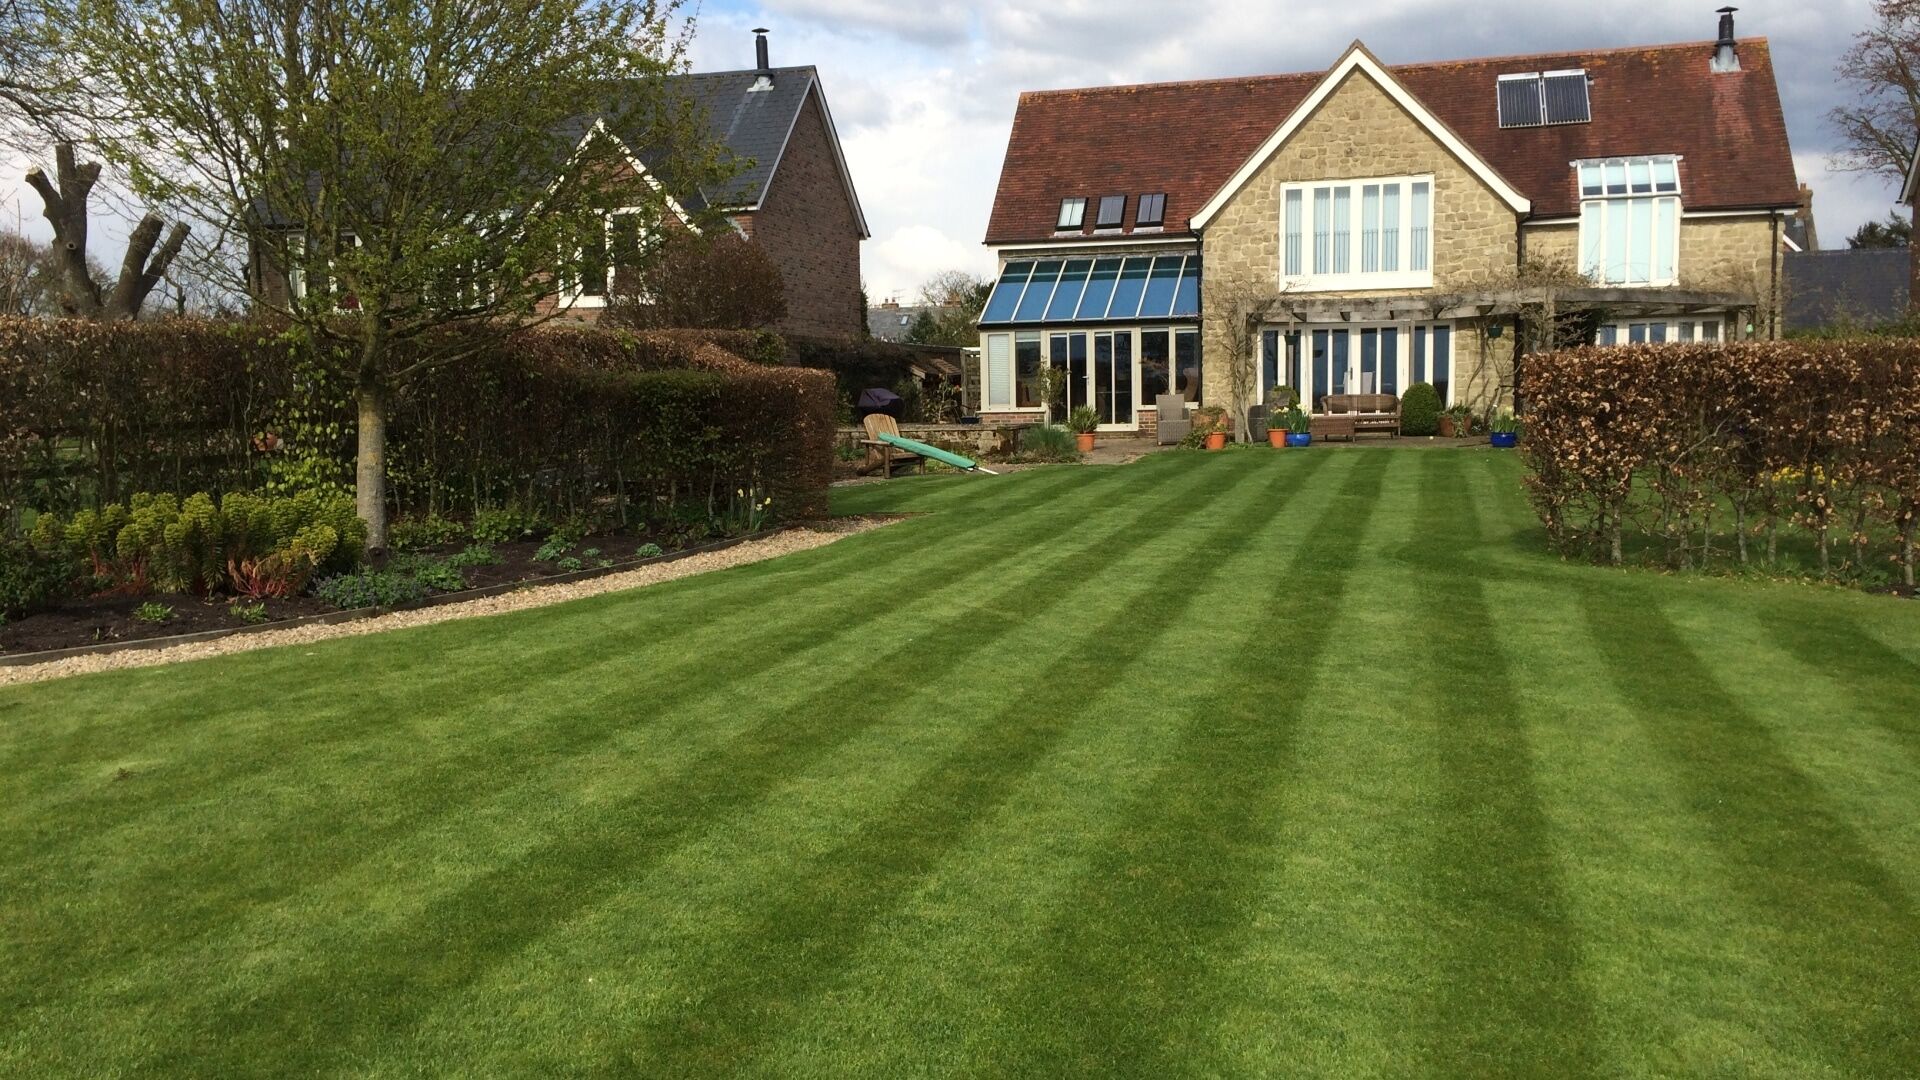 Stripes mowed in lawn outside house